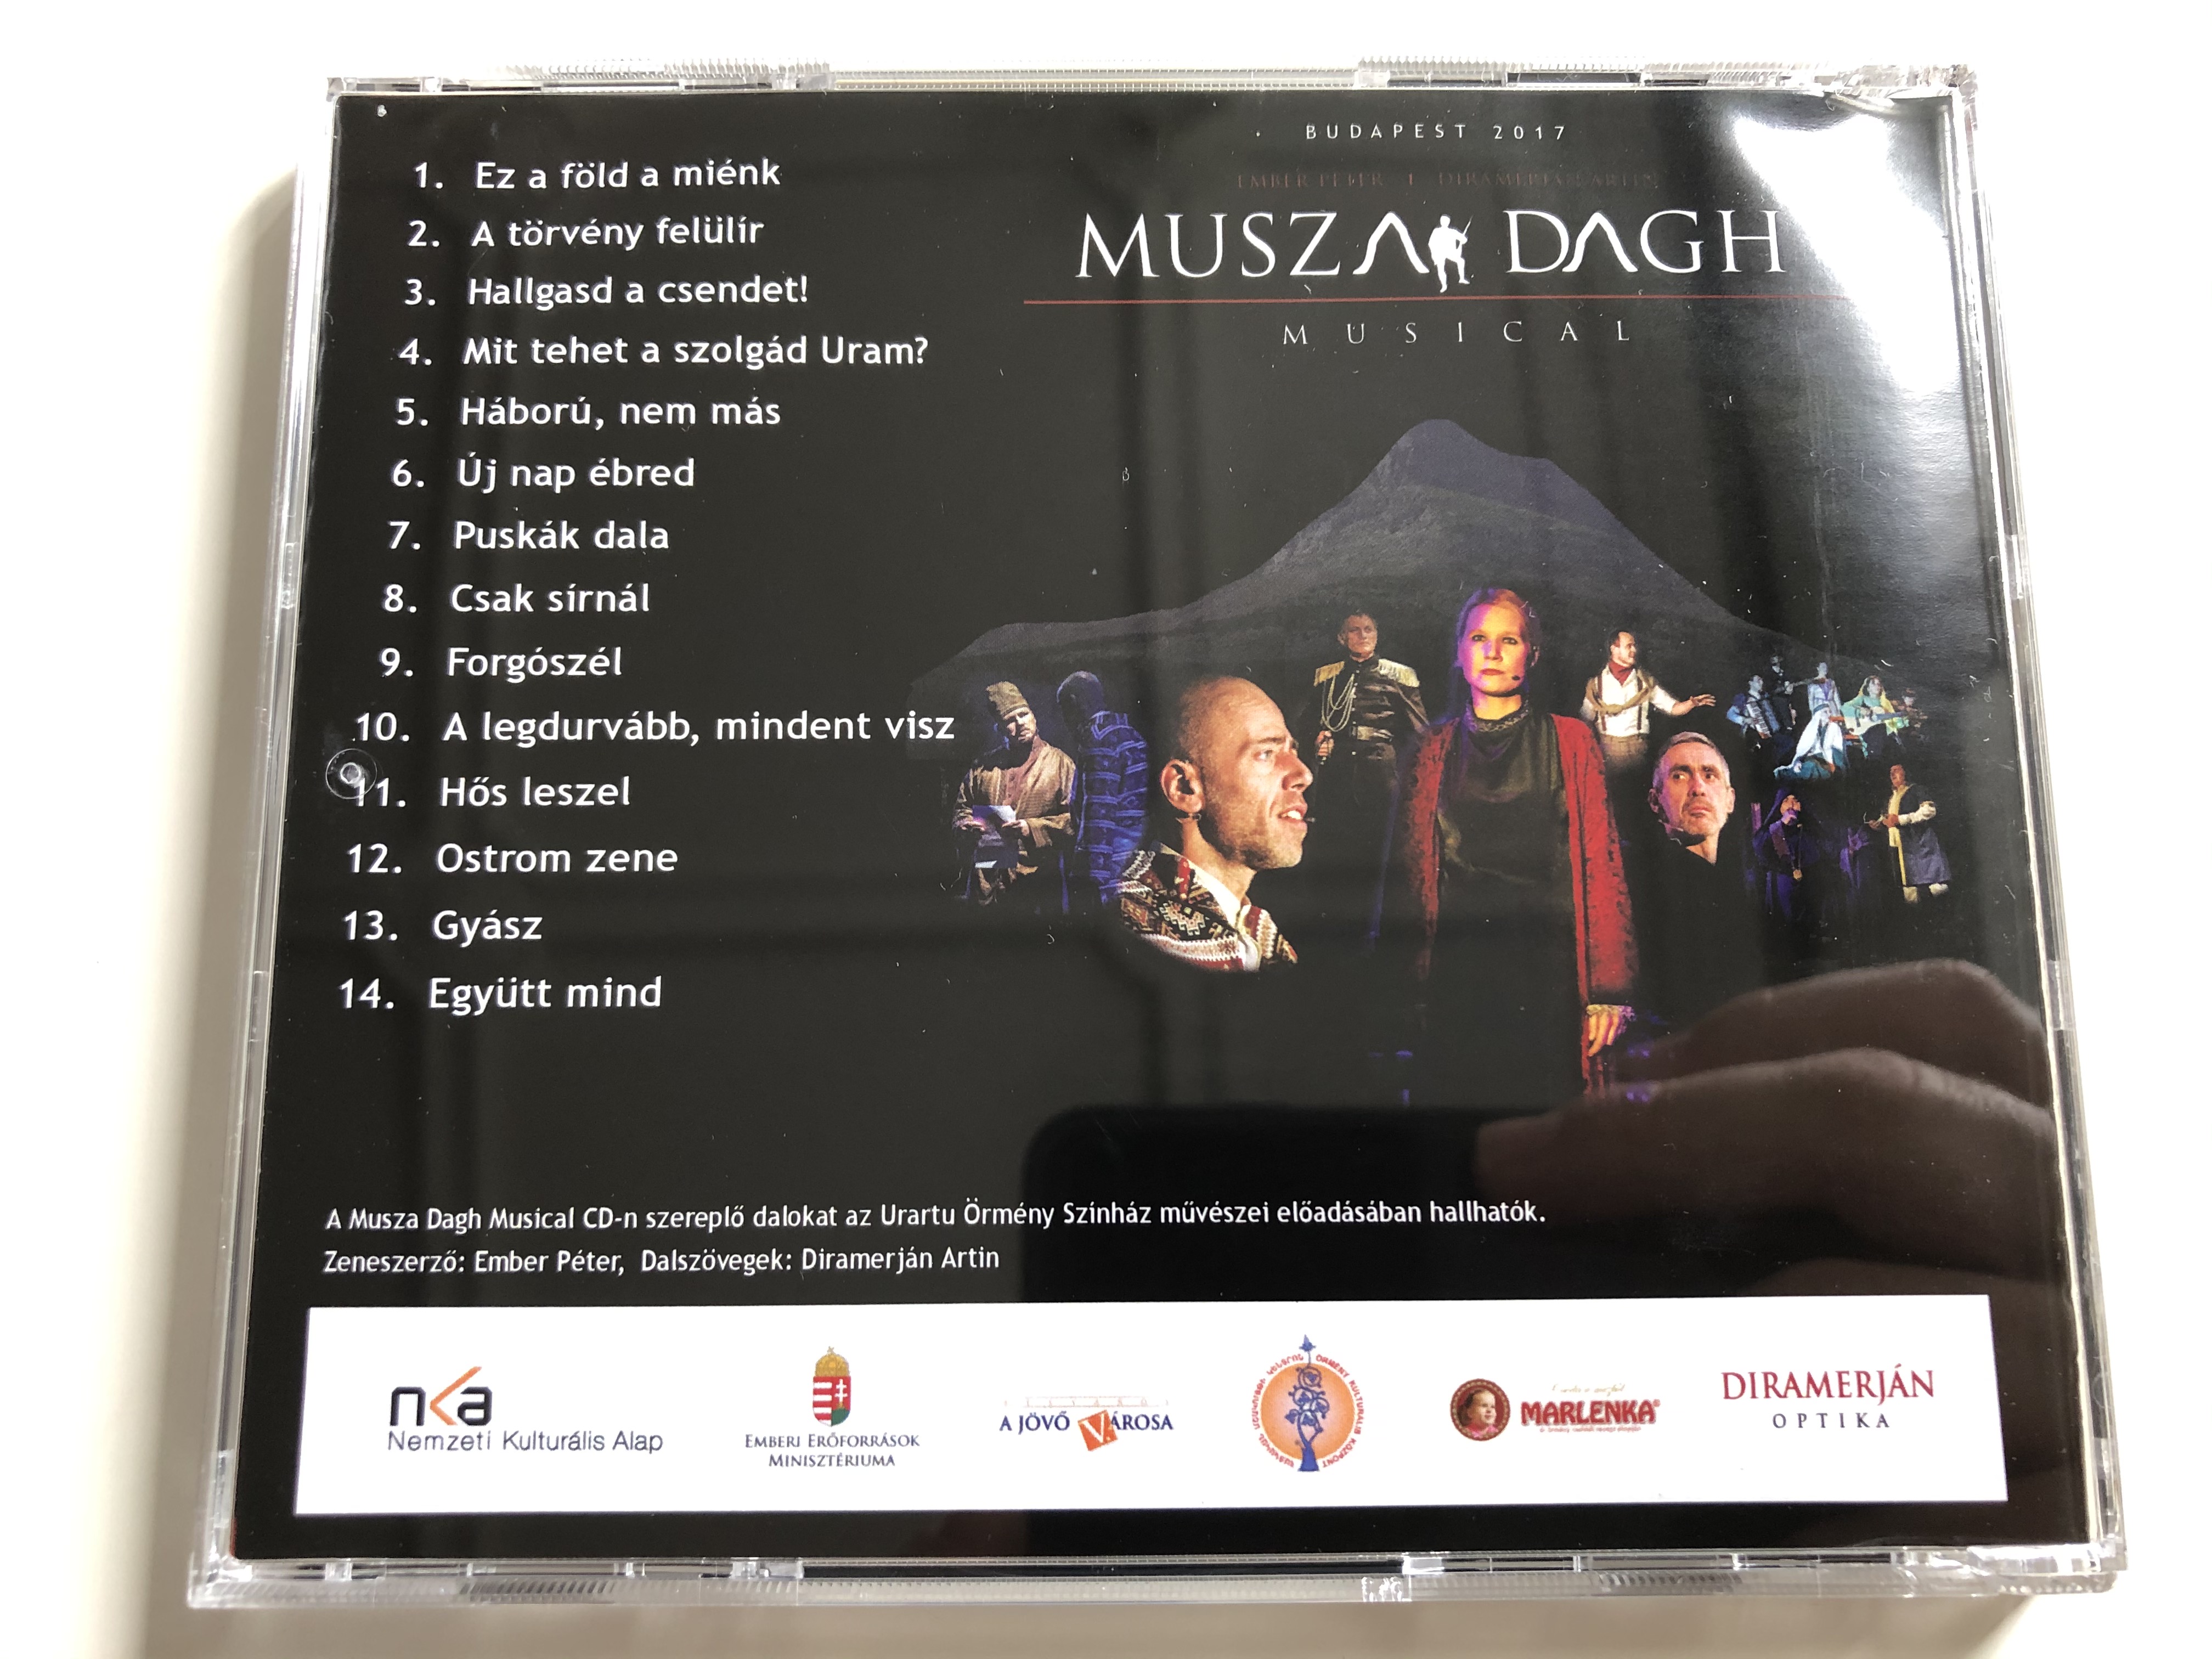 ember-peter-i-diramejan-artin-musza-dagh-musical-budapest-2017-audio-cd-6-.jpg